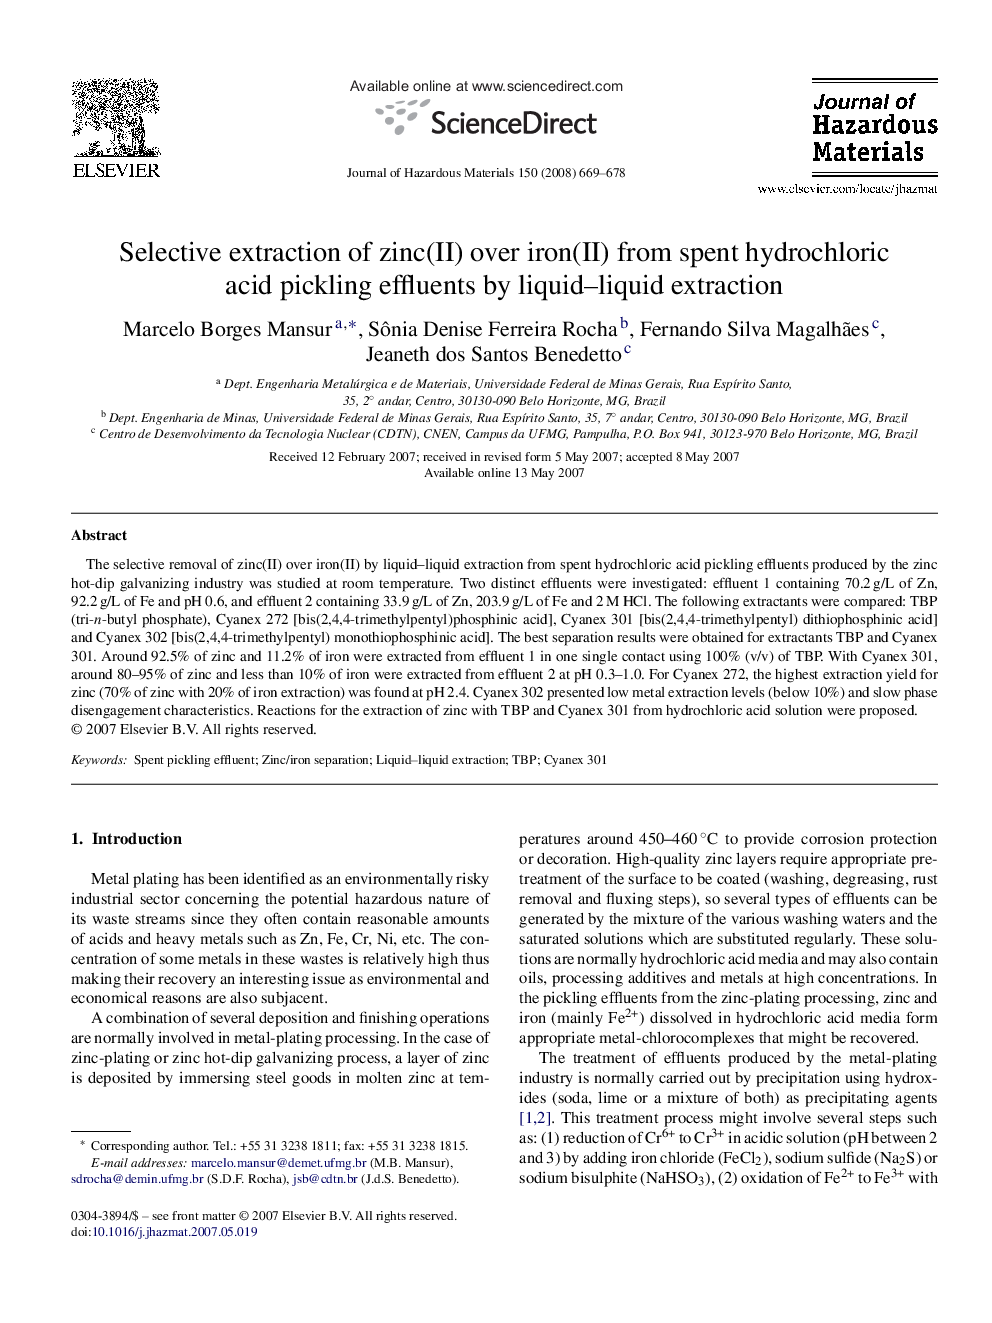 Selective extraction of zinc(II) over iron(II) from spent hydrochloric acid pickling effluents by liquid-liquid extraction